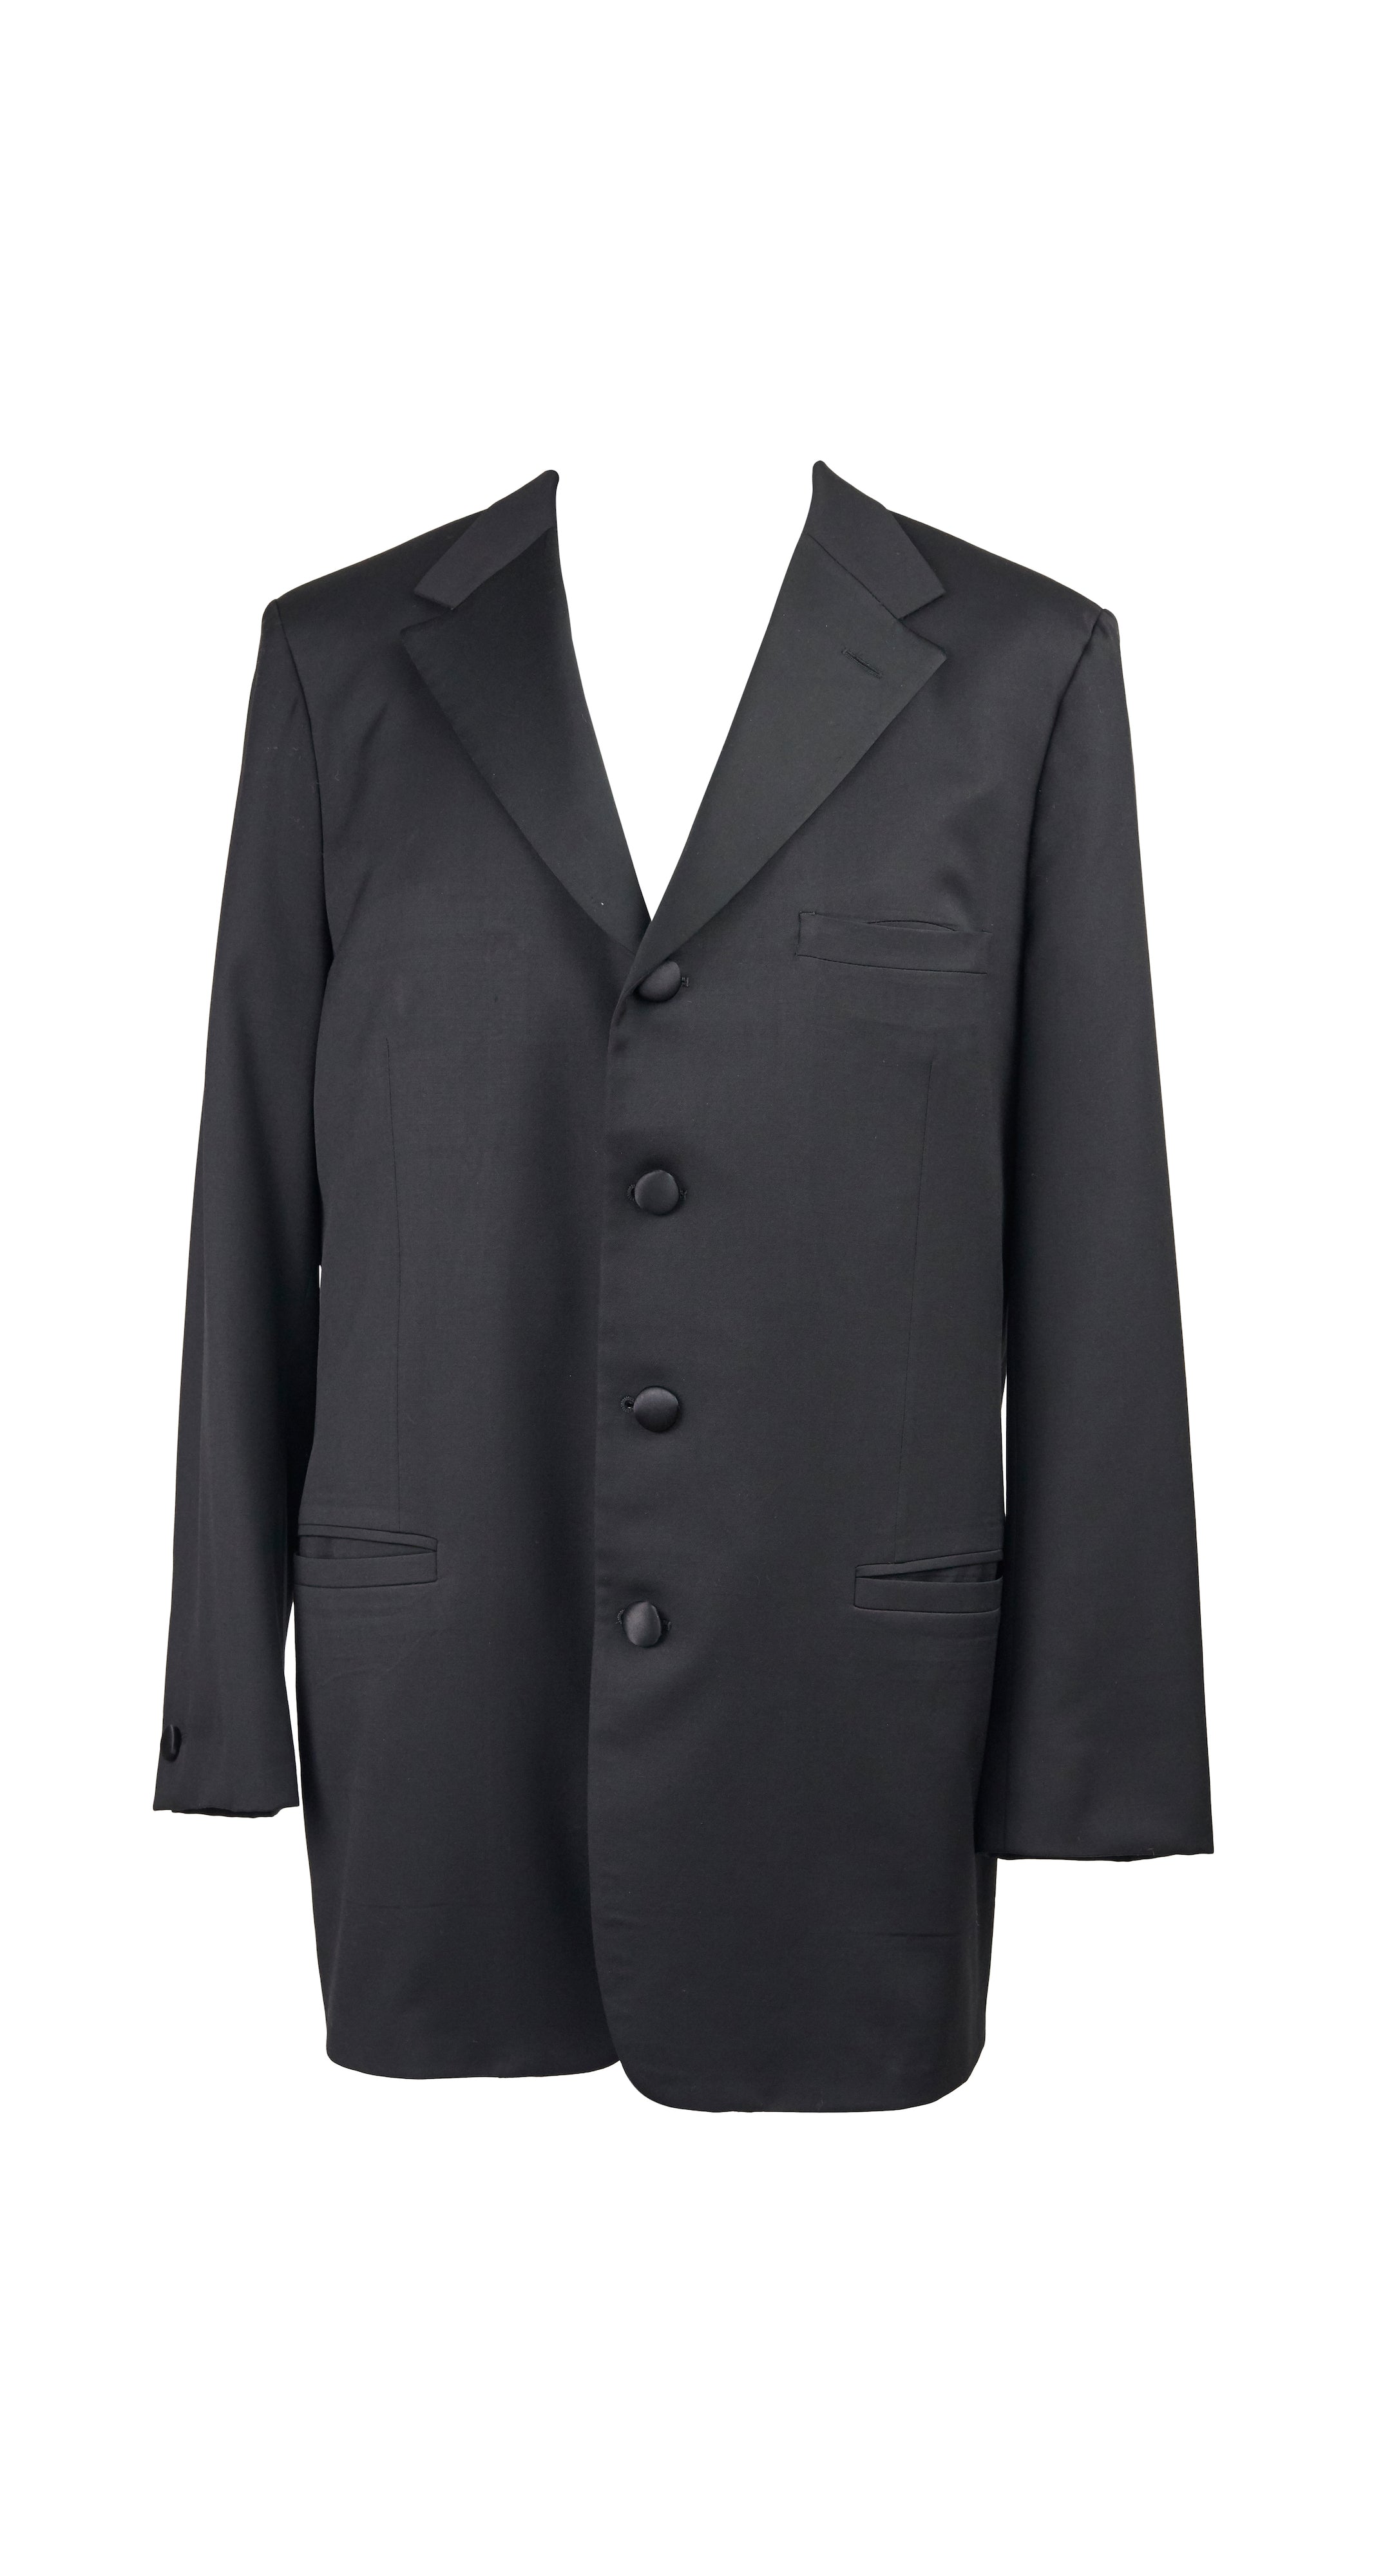 1990s Men's Black Wool and Silk Satin Suit Jacket